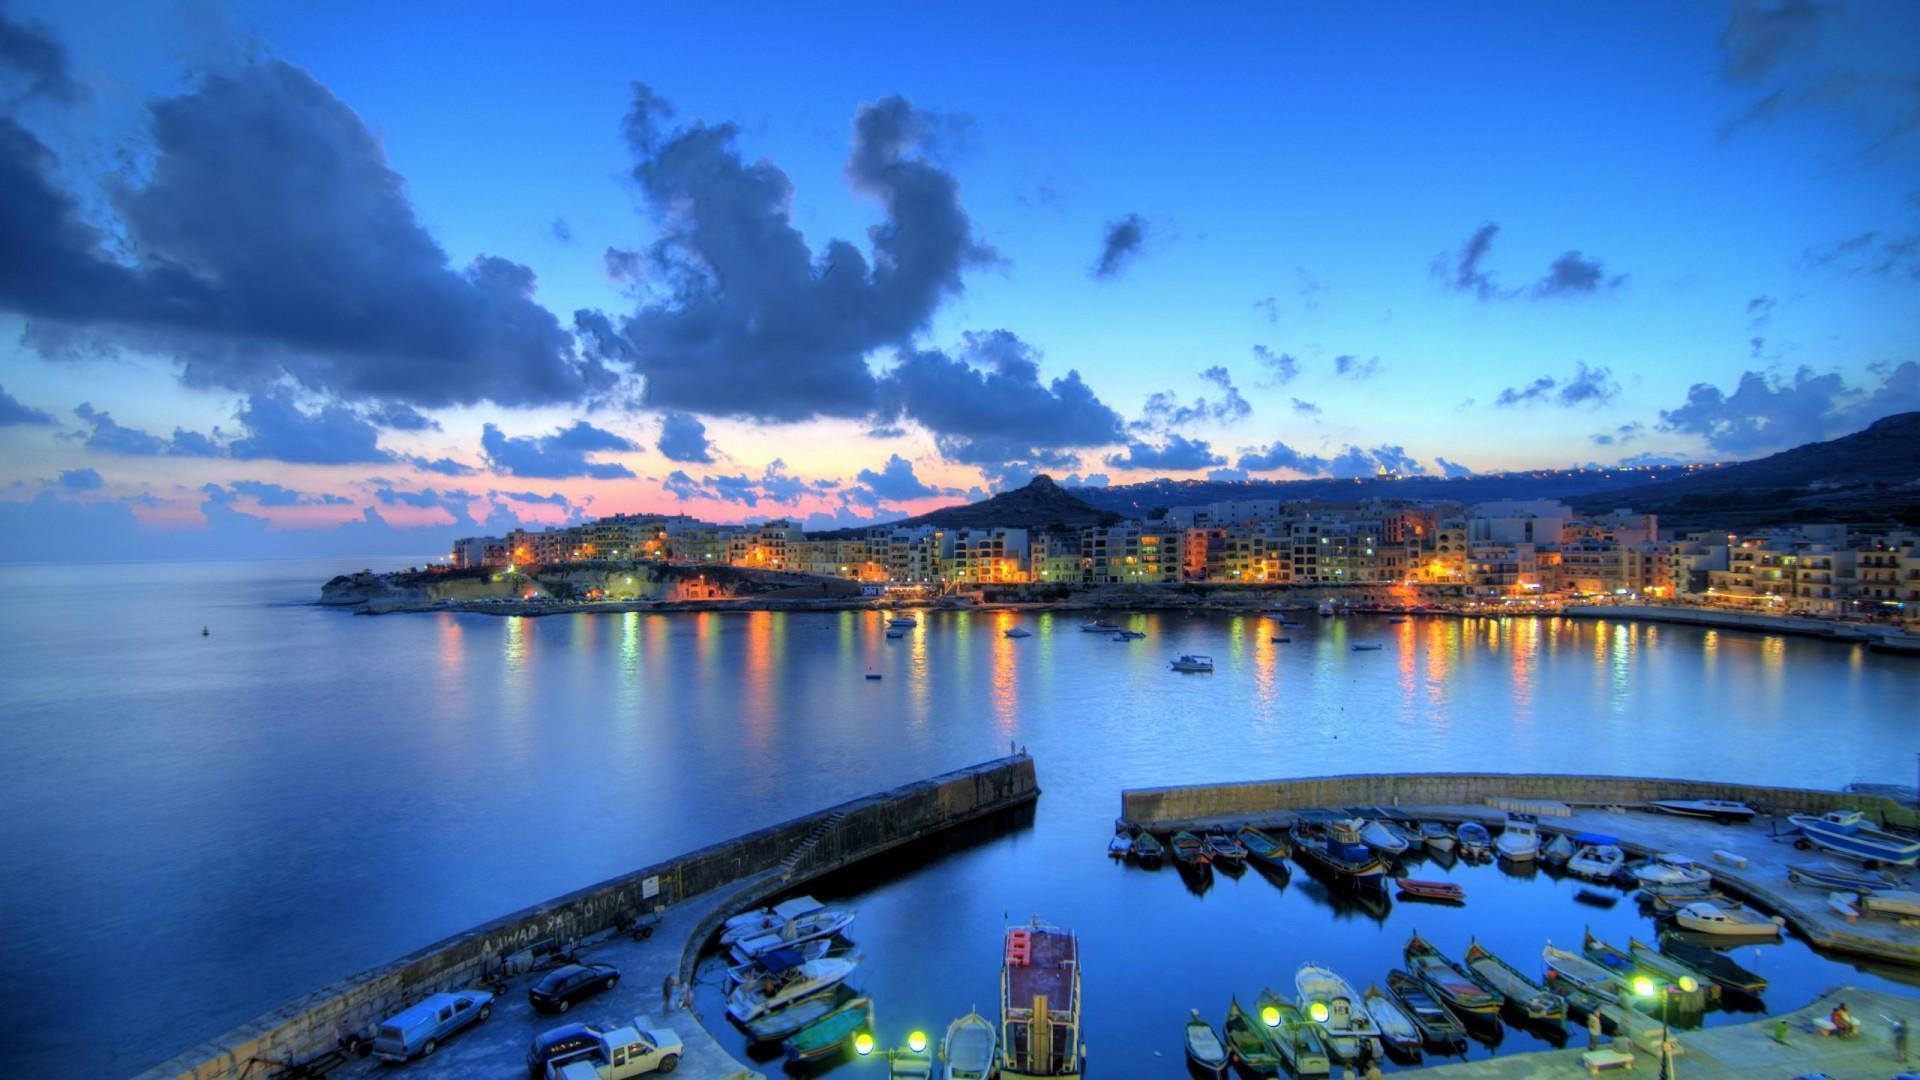 Download wallpapers Malta, Mediterranean Sea, yachts, rocks, coast, summer  for desktop free. Pictures for desktop free | Malte paysage, Paysage, Yacht